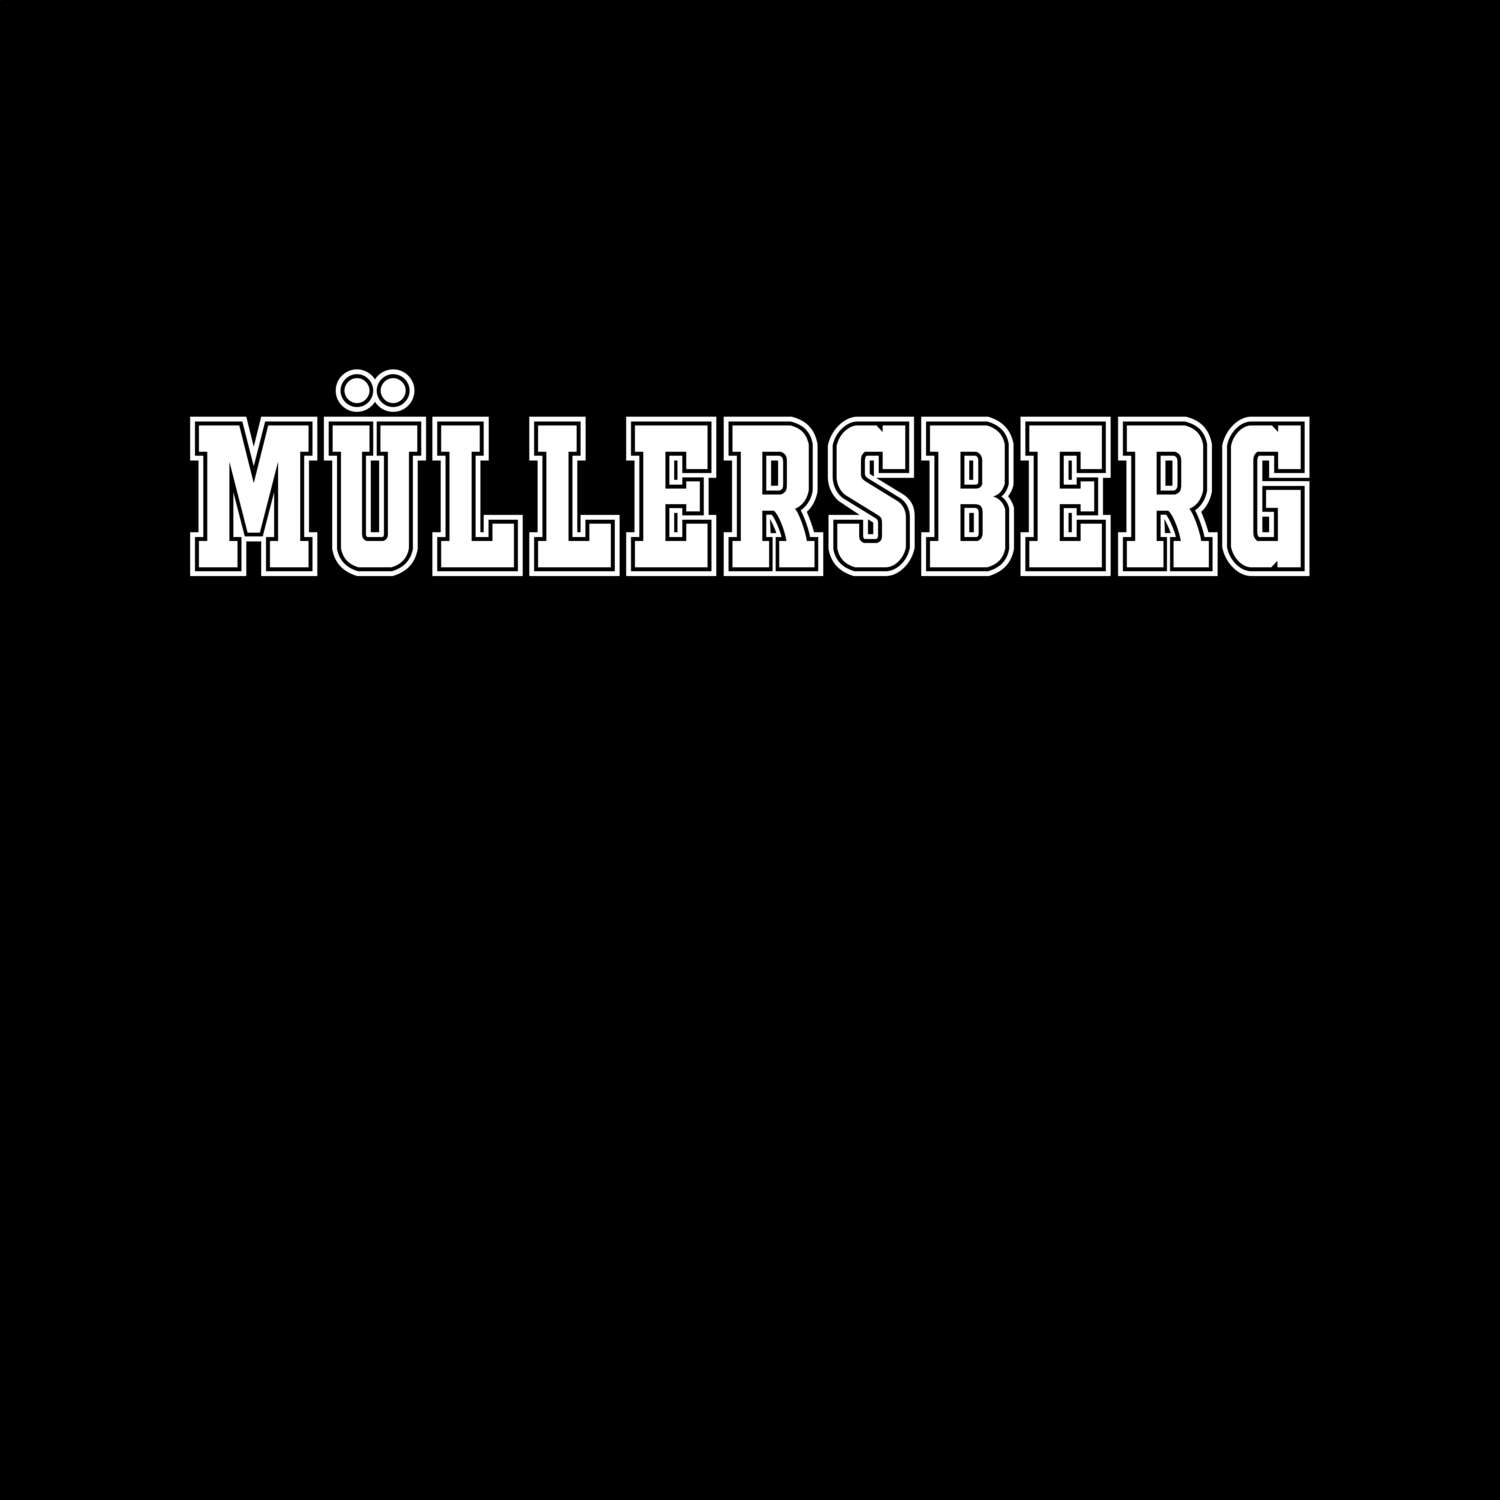 Müllersberg T-Shirt »Classic«